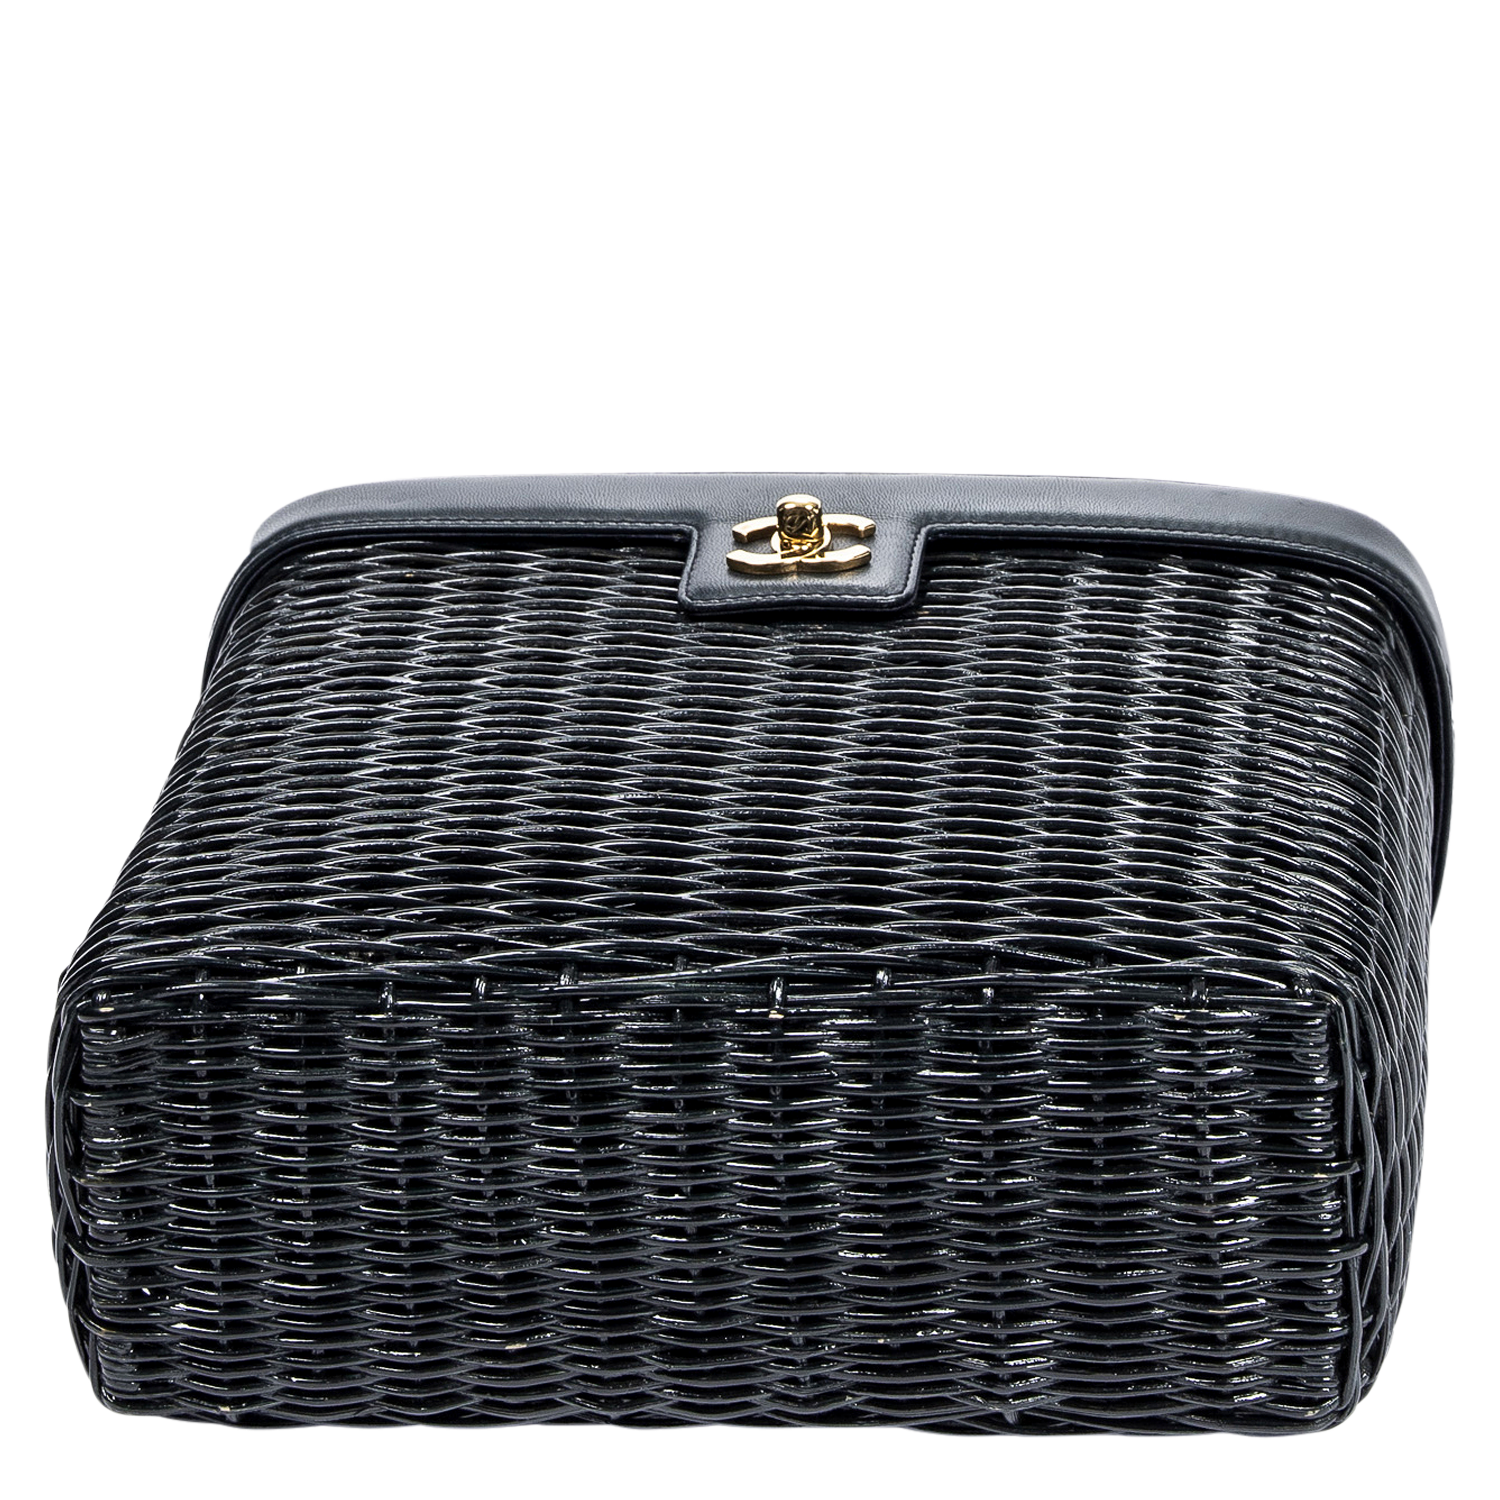 Chanel Wicker Basket Bag - Handbags - CHA31511